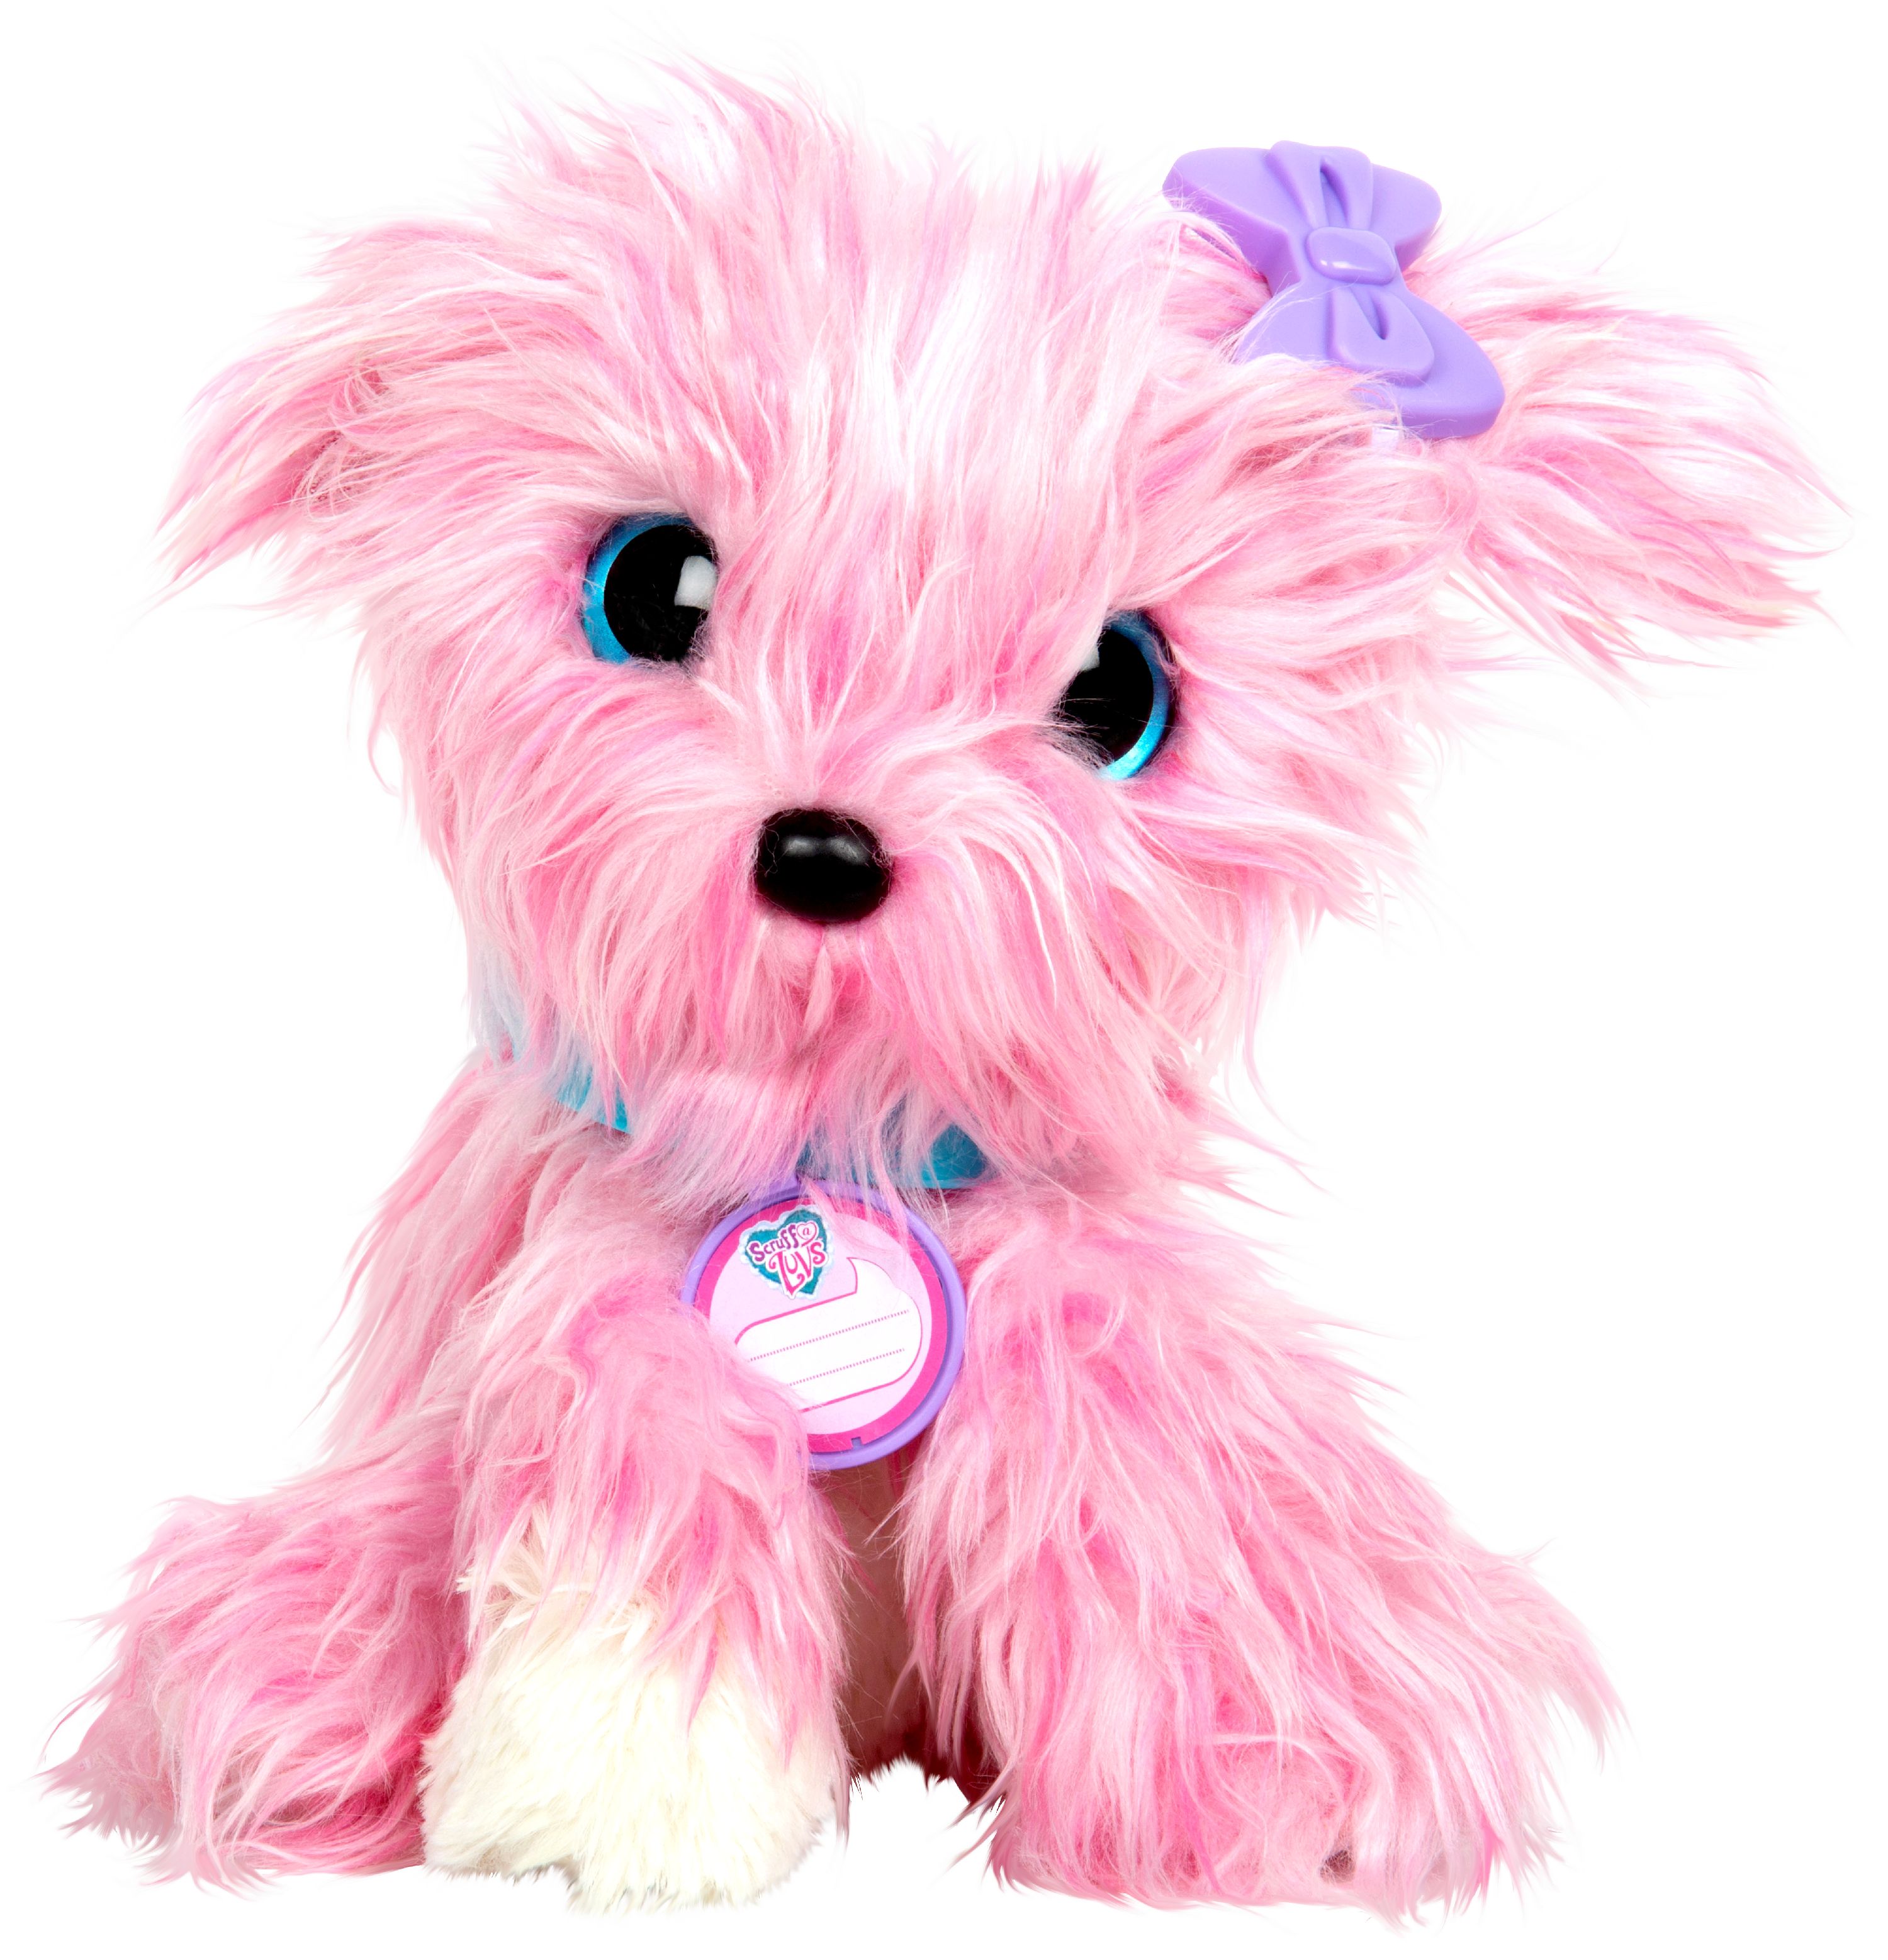 Розовый собака игрушка. Scruff-a-Luvs Пушистик-потеряшка розовый. Игрушка Scruff a Luvs Пушистик-потеряшка. Потеряшка Пушистик игрушка розовый. Розовая собачка игрушка.